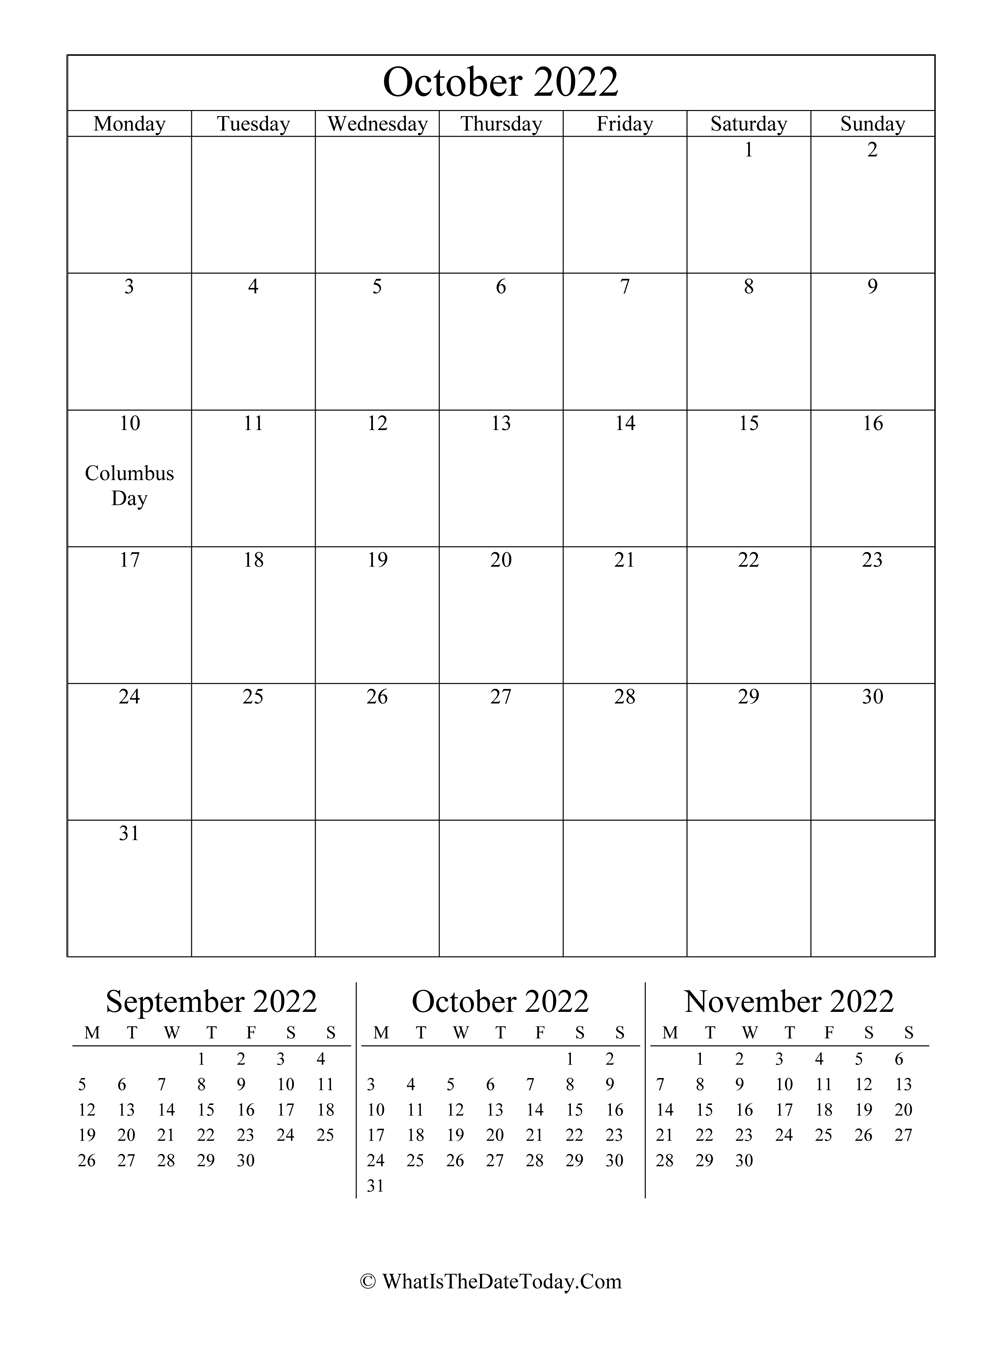 October 2022 Editable Calendar (Vertical Layout) | Whatisthedatetoday.com